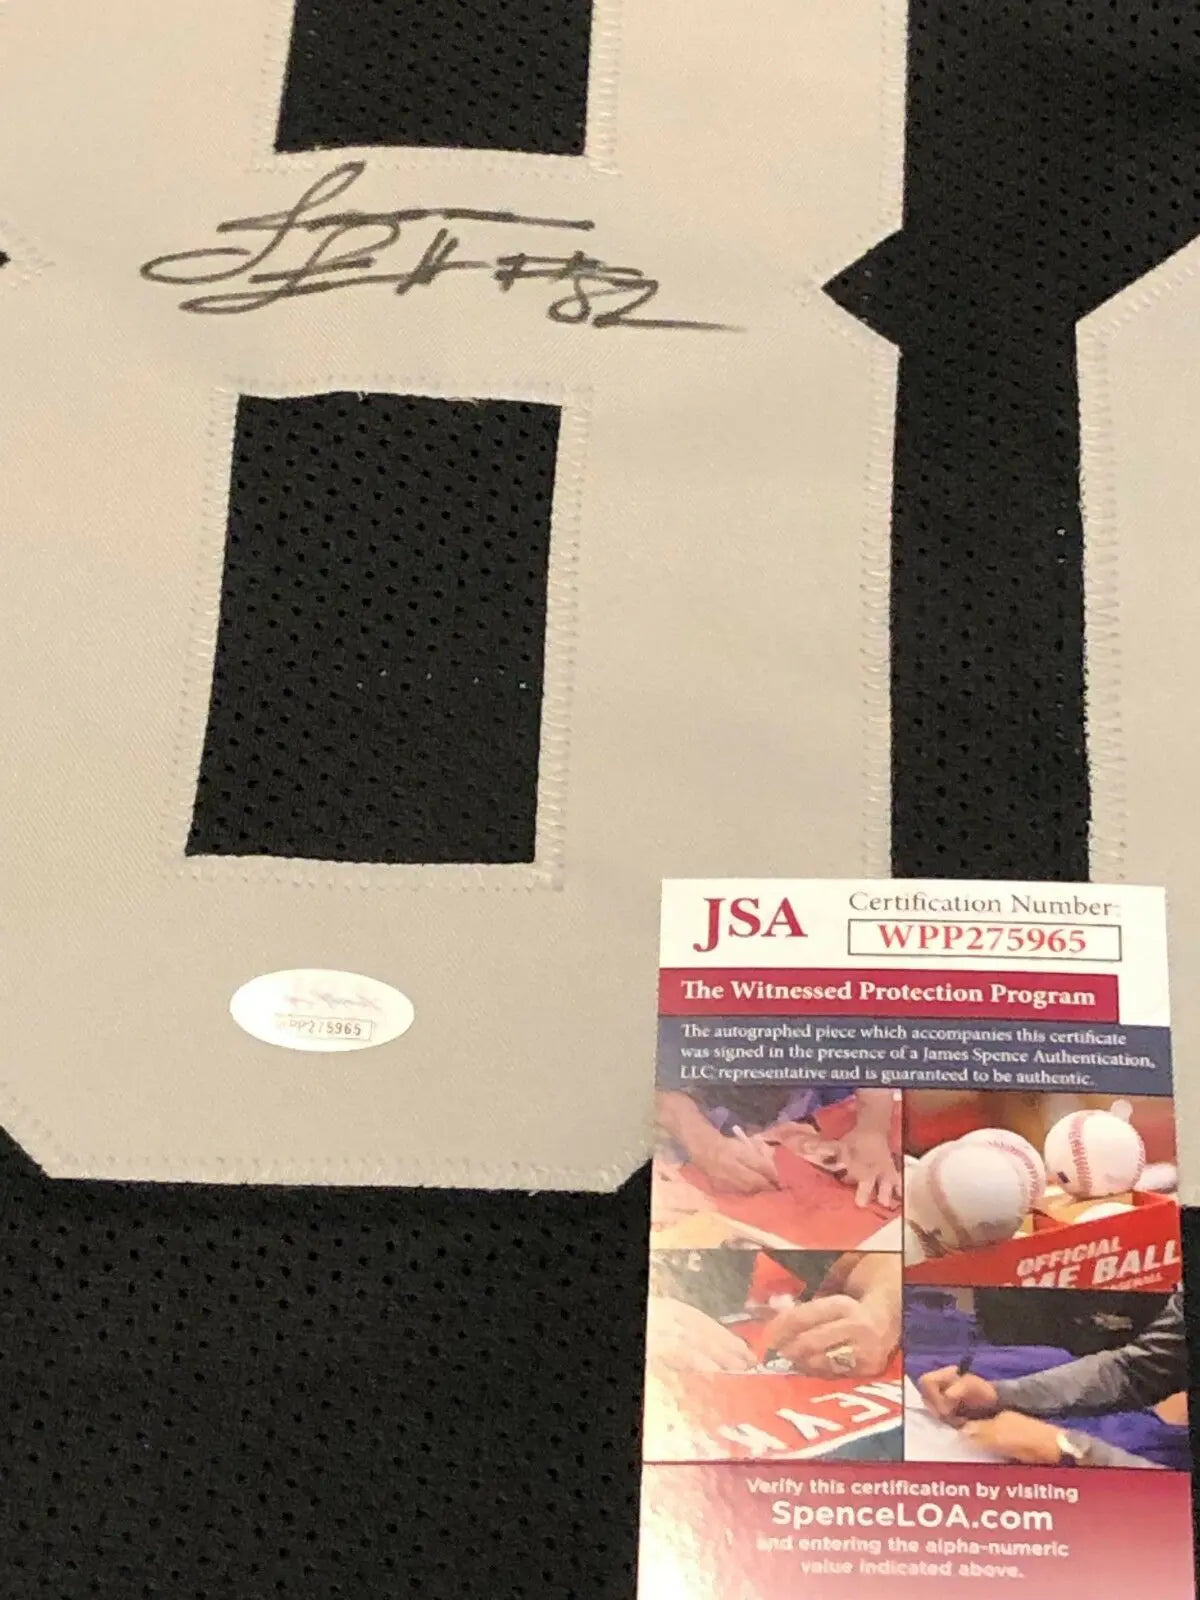 Oakland Raiders James Jett Autographed Signed Jersey Jsa Coa – MVP  Authentics